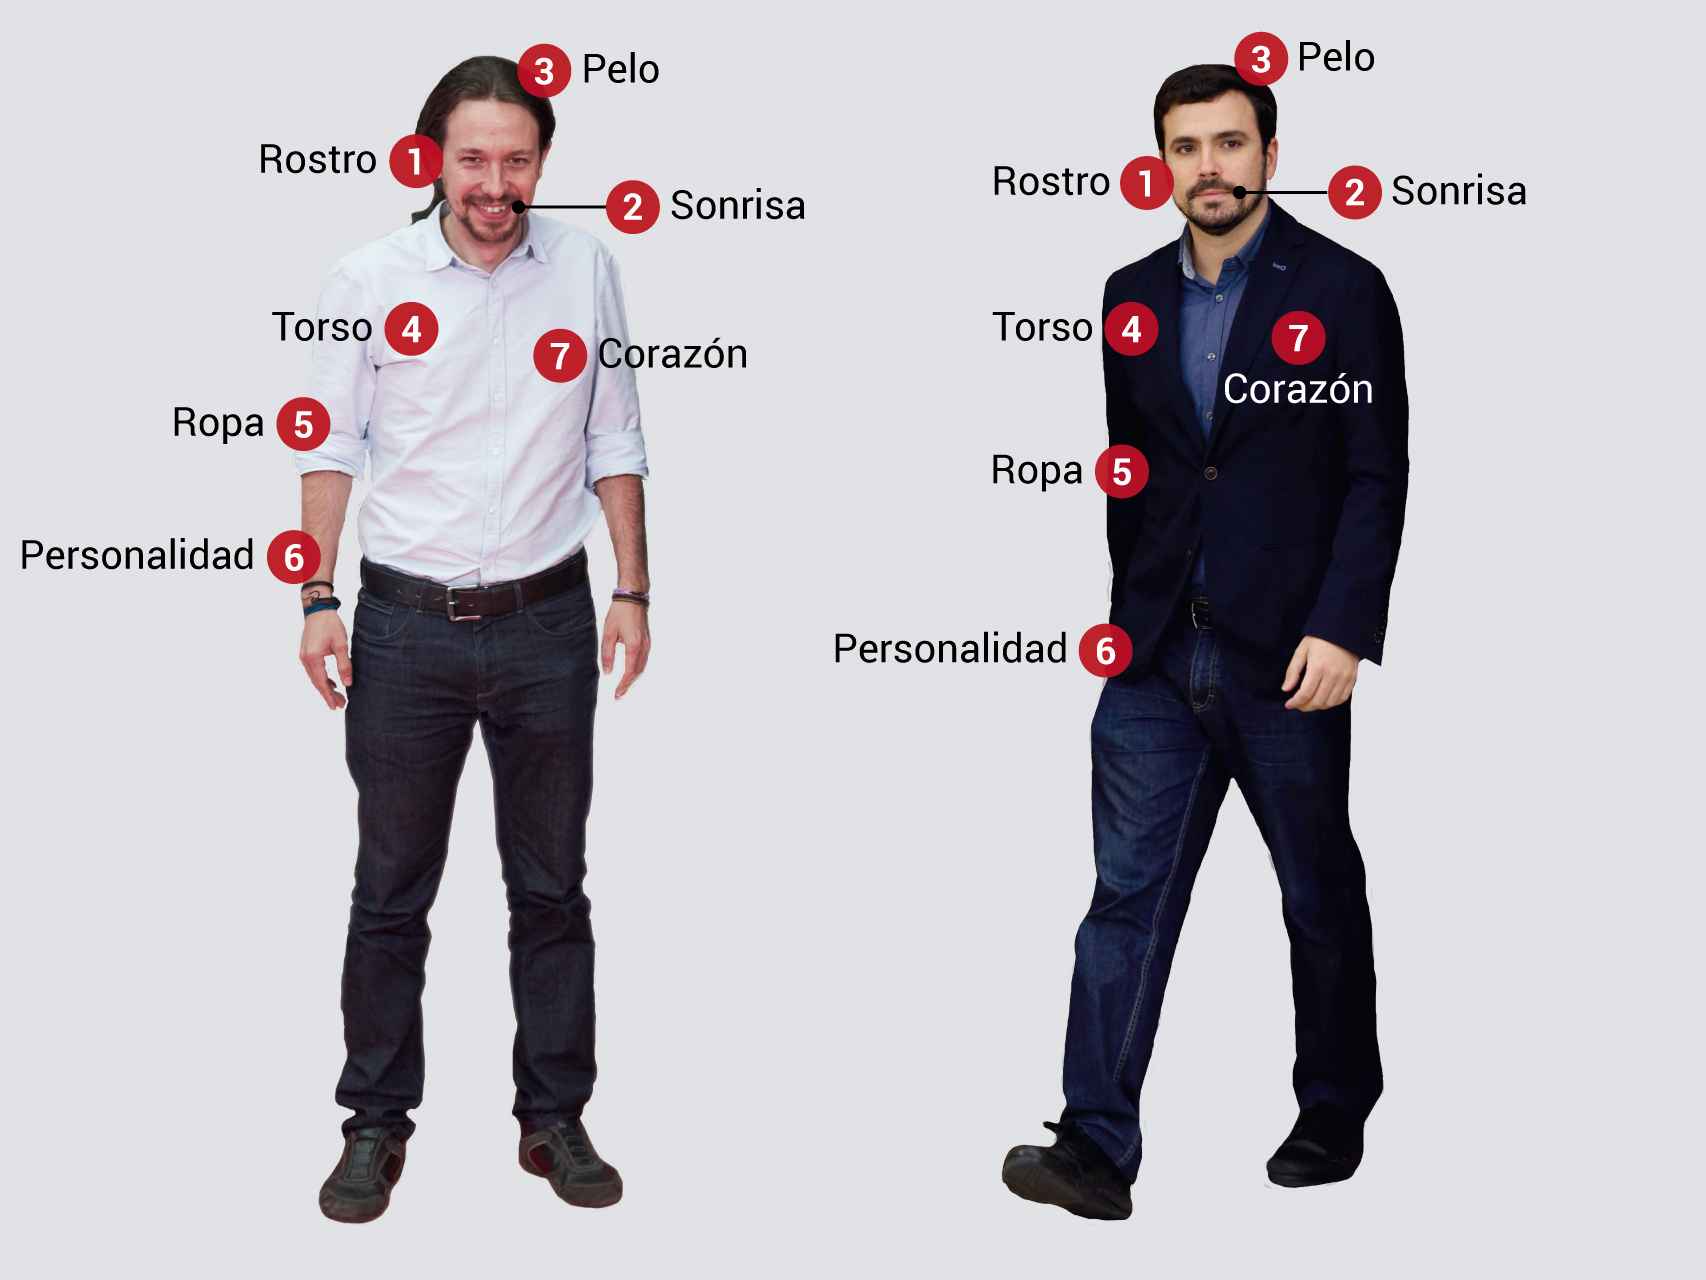 Pablo Iglesias y Alberto Garzón